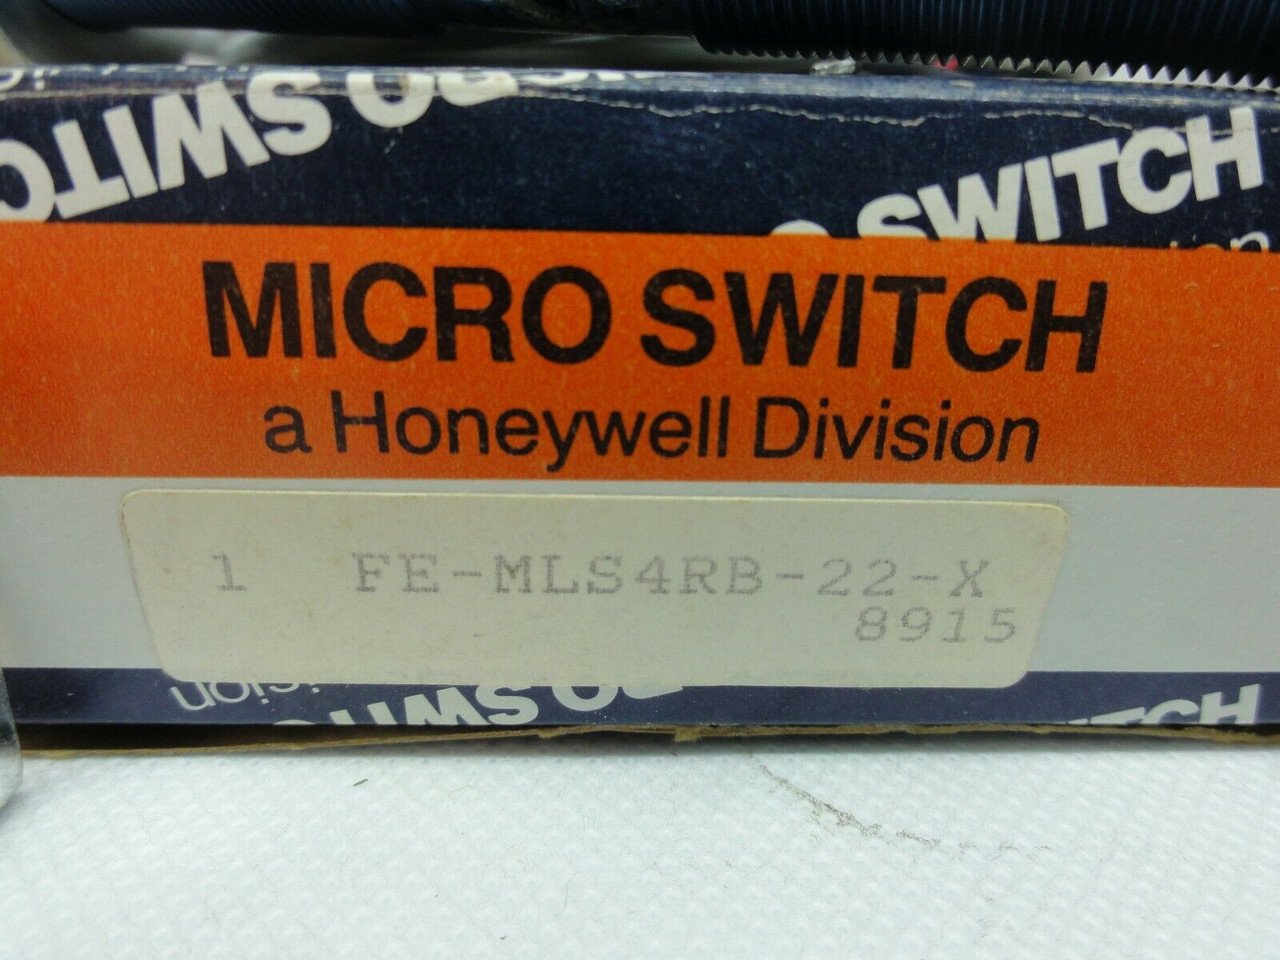 Honeywell Micro Switch FE-MLS4RB-22-X-8915